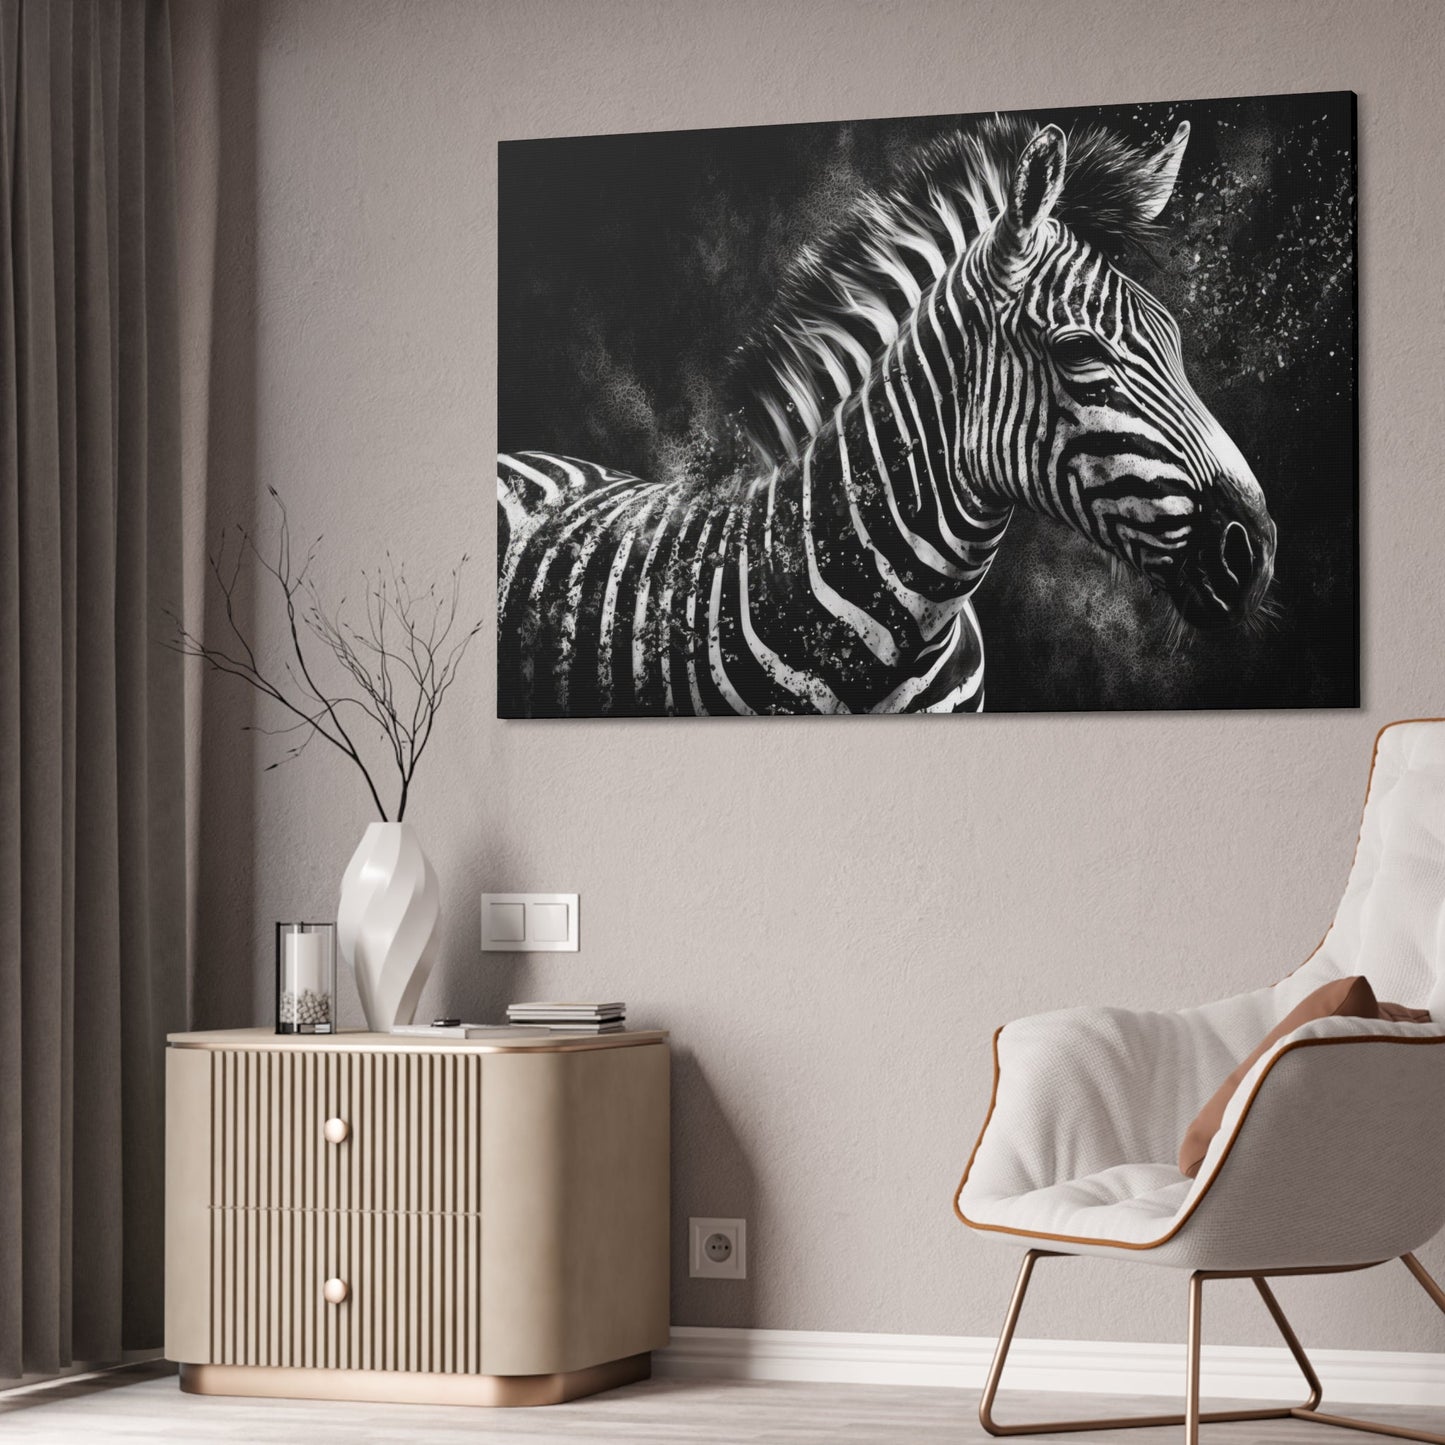 Black and White Elegance: Zebra Canvas & Poster Print Wall Art